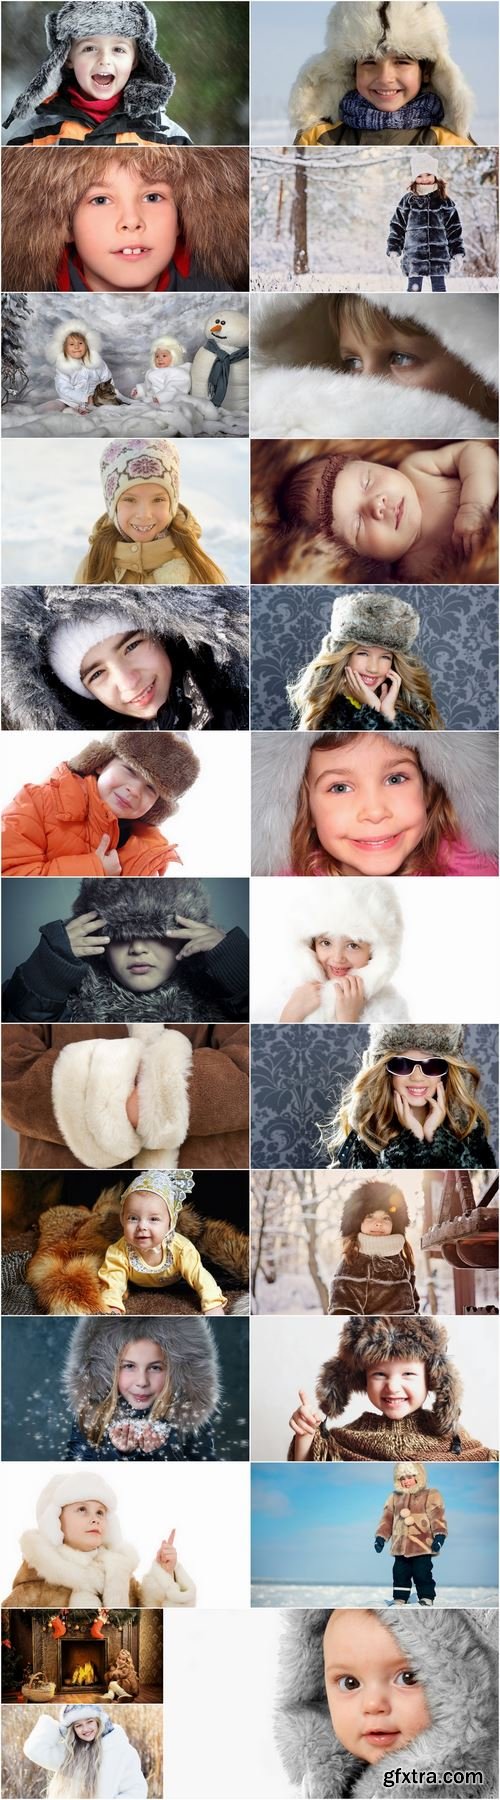 Teenage children child in warm clothes cap coat jacket 25 HQ Jpeg